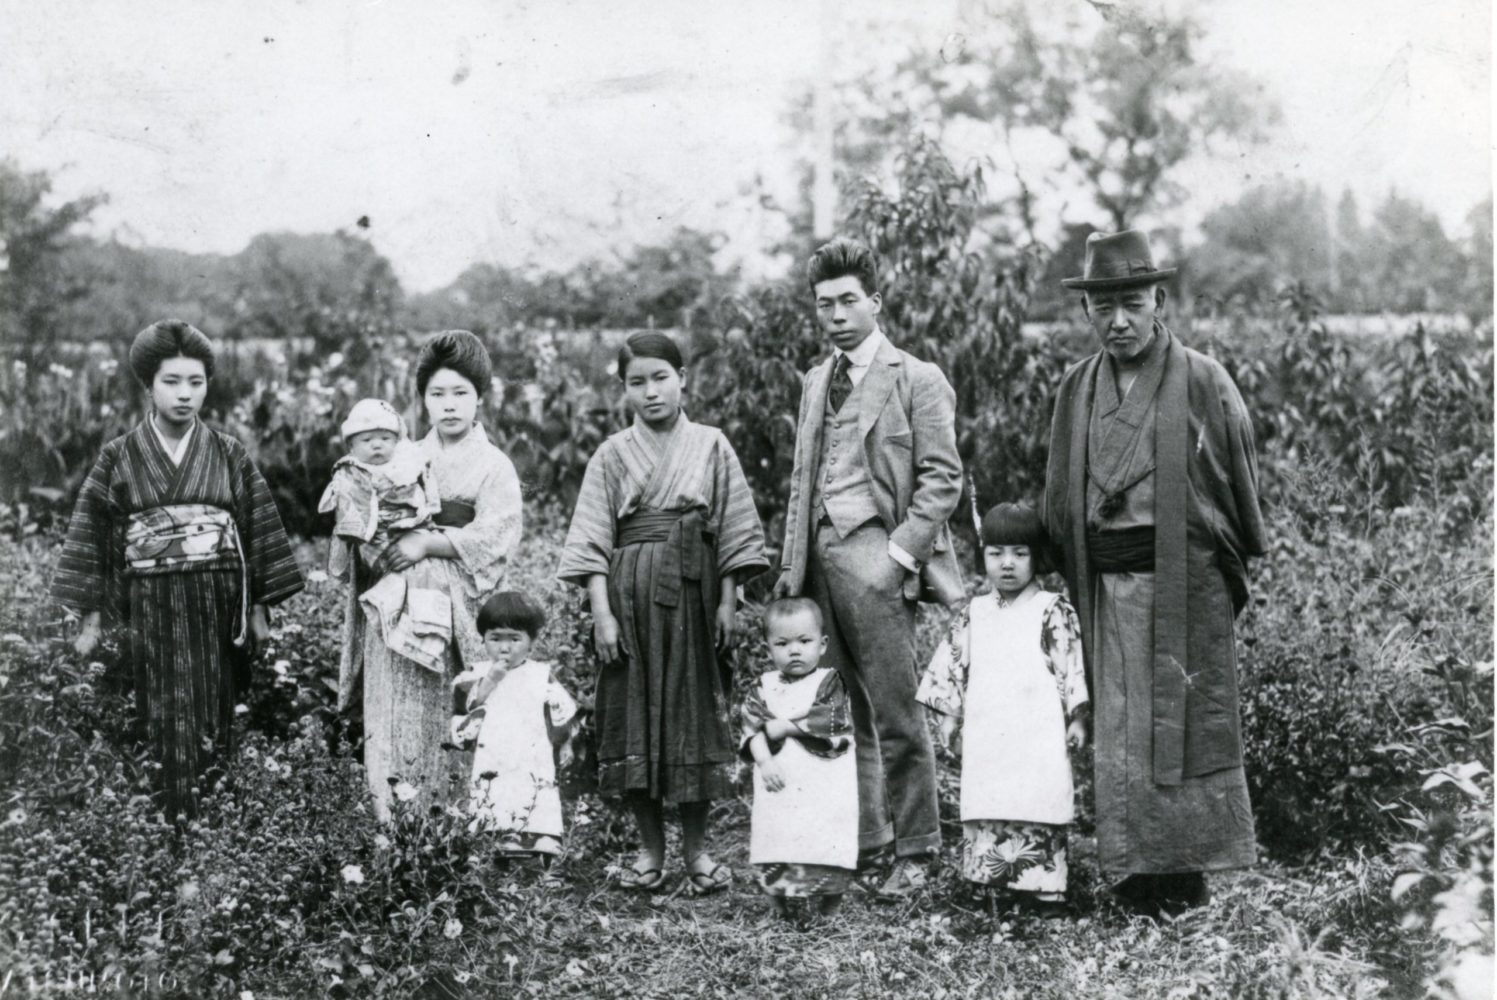 Yayoi Kusama with her family, courtesy of the artist.